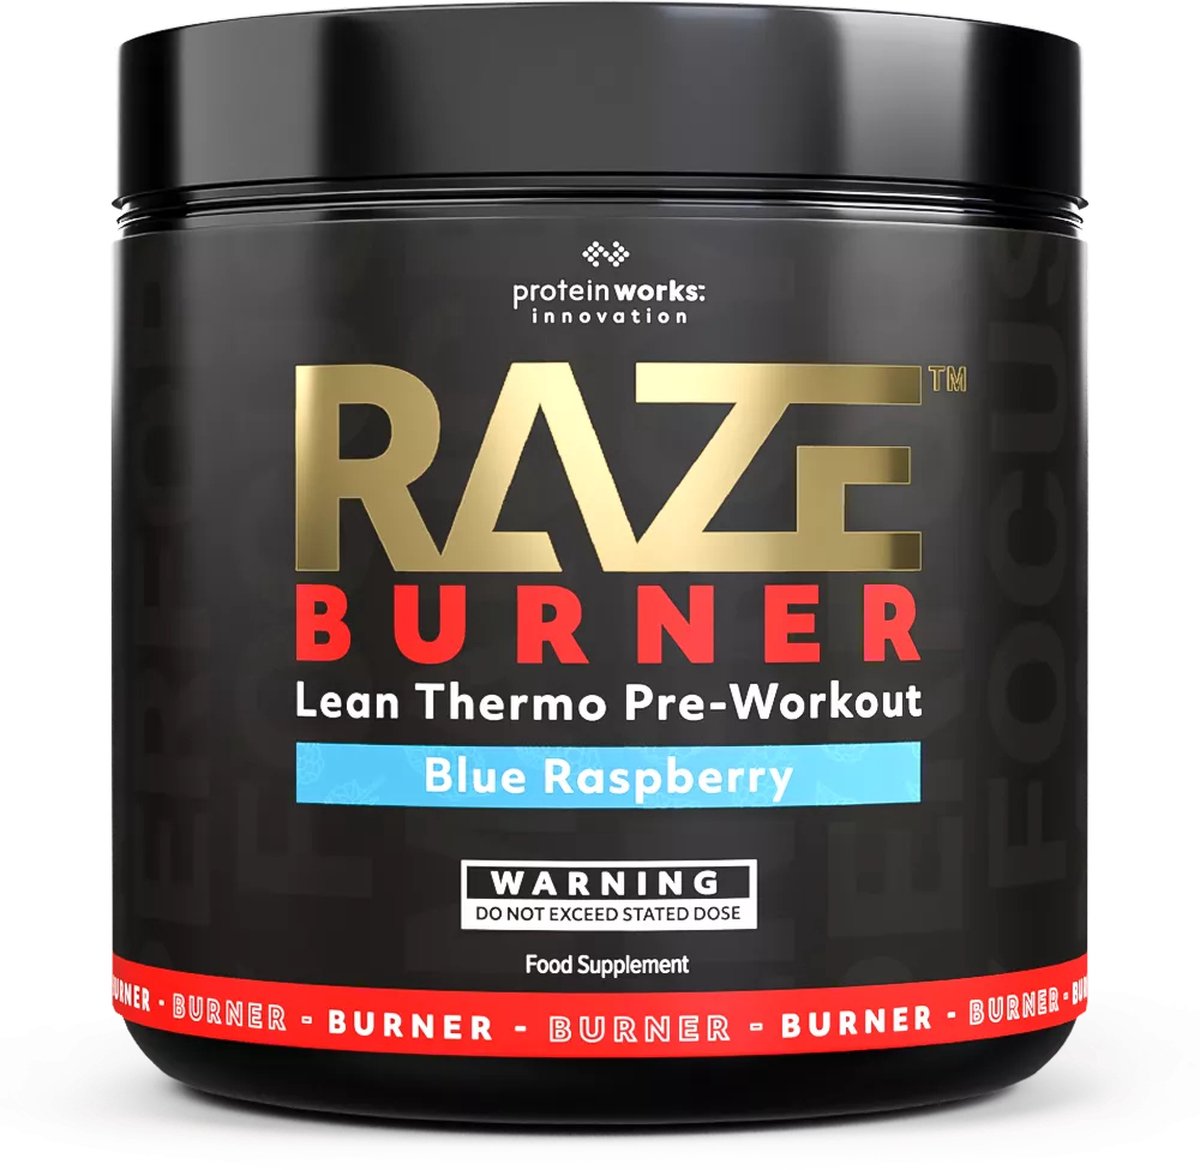 The Protein Works - Raze Burner - Pre-workout - Blue Raspberry